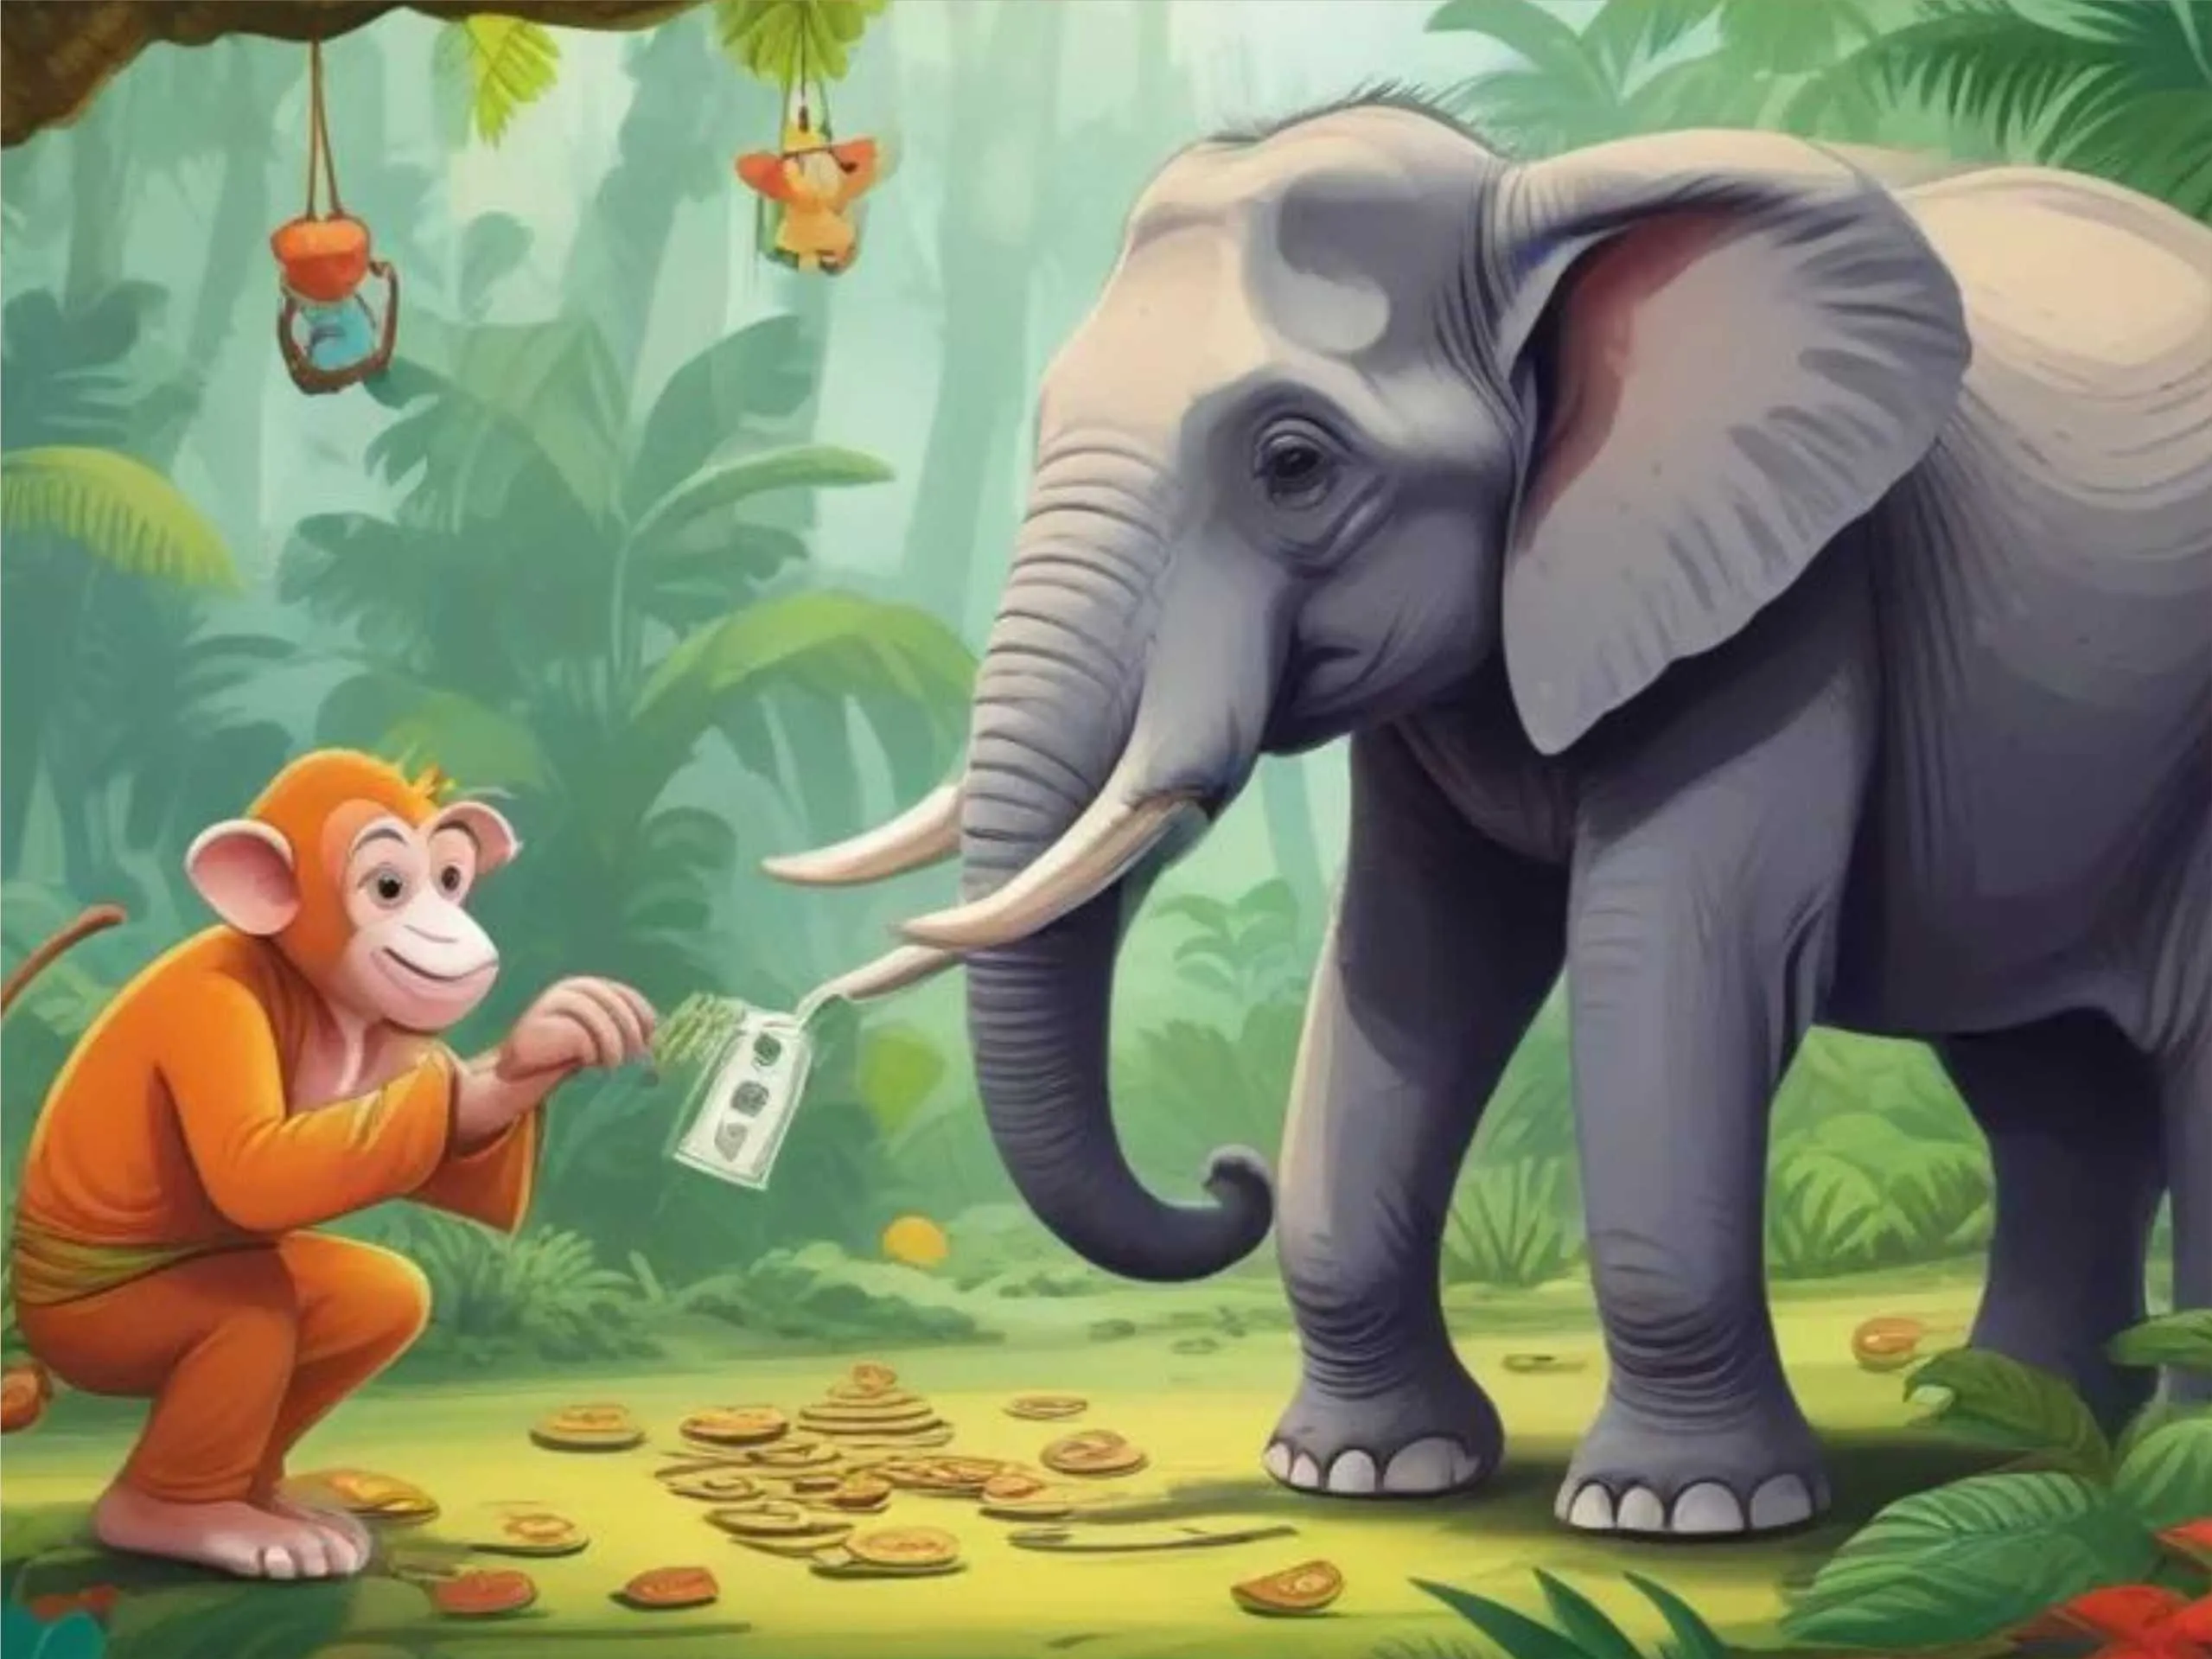 catoon image of an elephant and monkey 